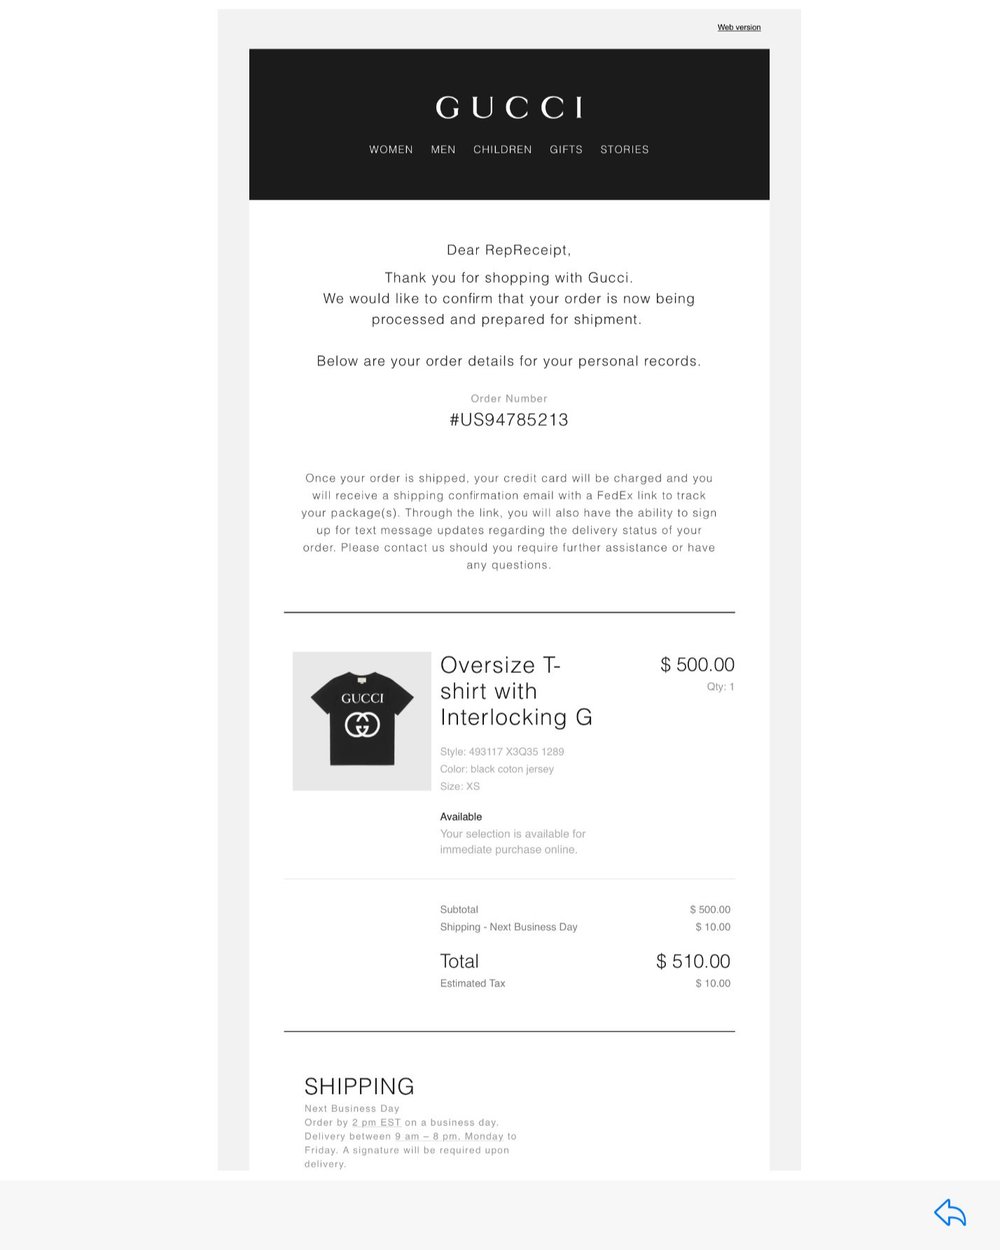 Gucci email receipt — RepReceipt